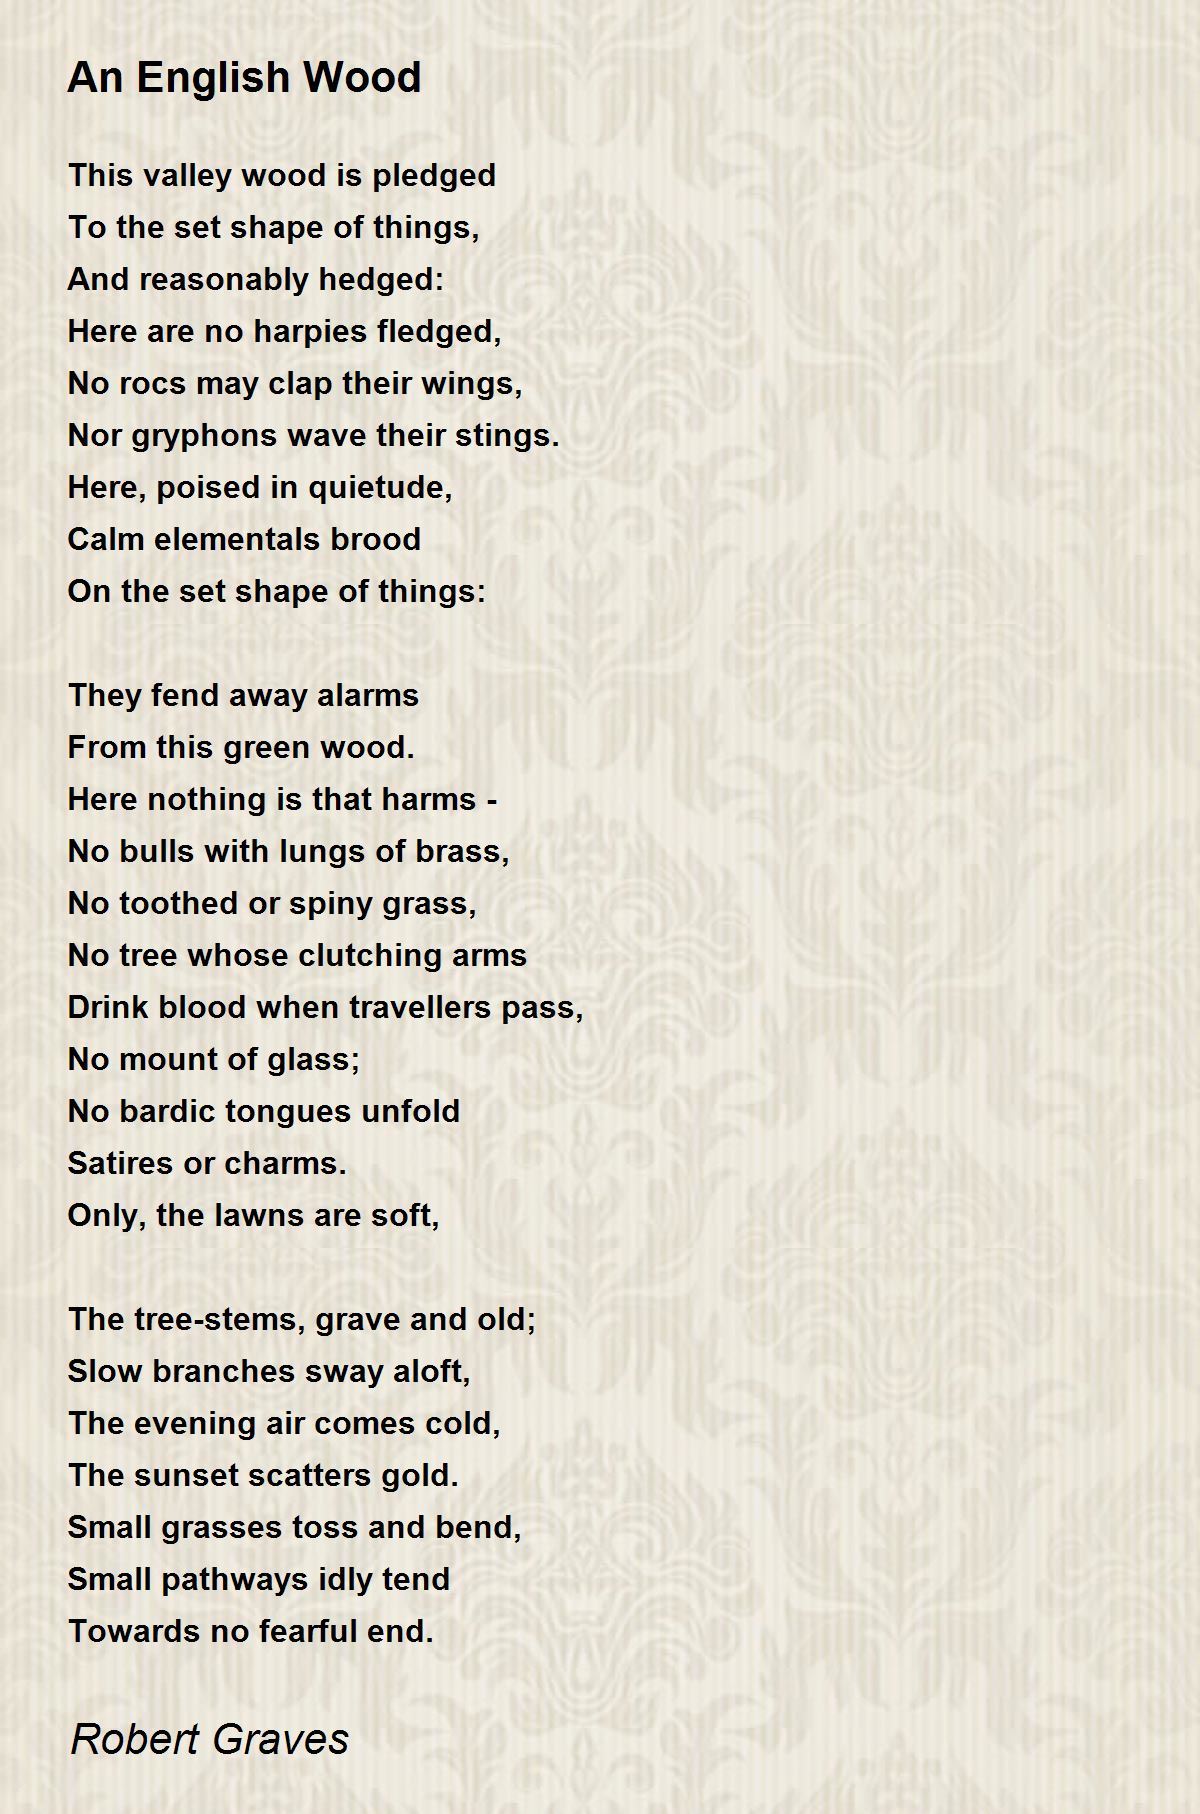 An English Wood Poem by Robert Graves - Poem Hunter